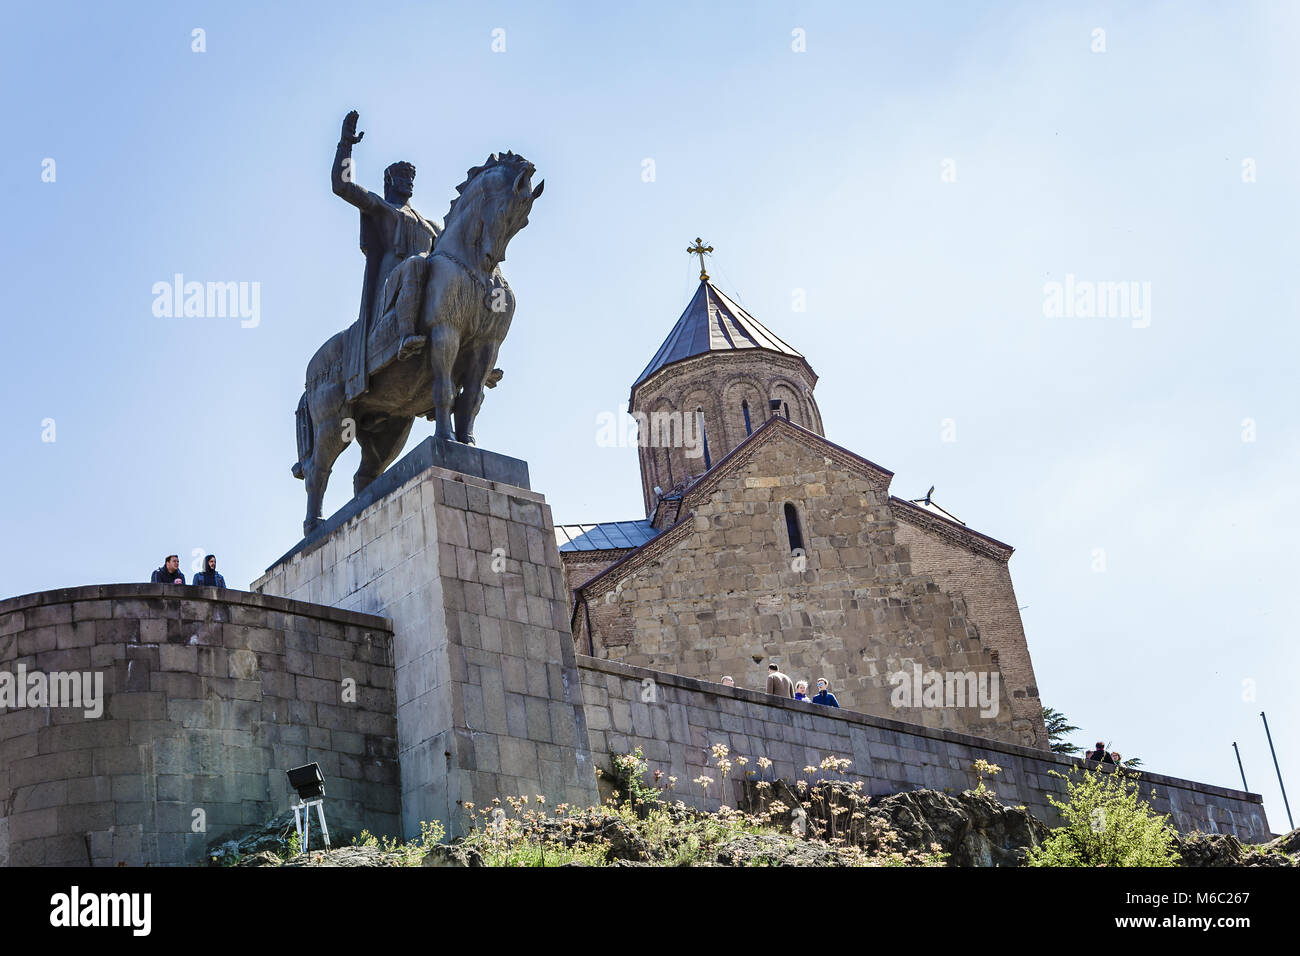 Monumento a Tsar Vakhtang Gorgasal vicino alla antica fortezza del XIII secolo a Tbilisi, Georgia. Aprile 17, 2015 Foto Stock